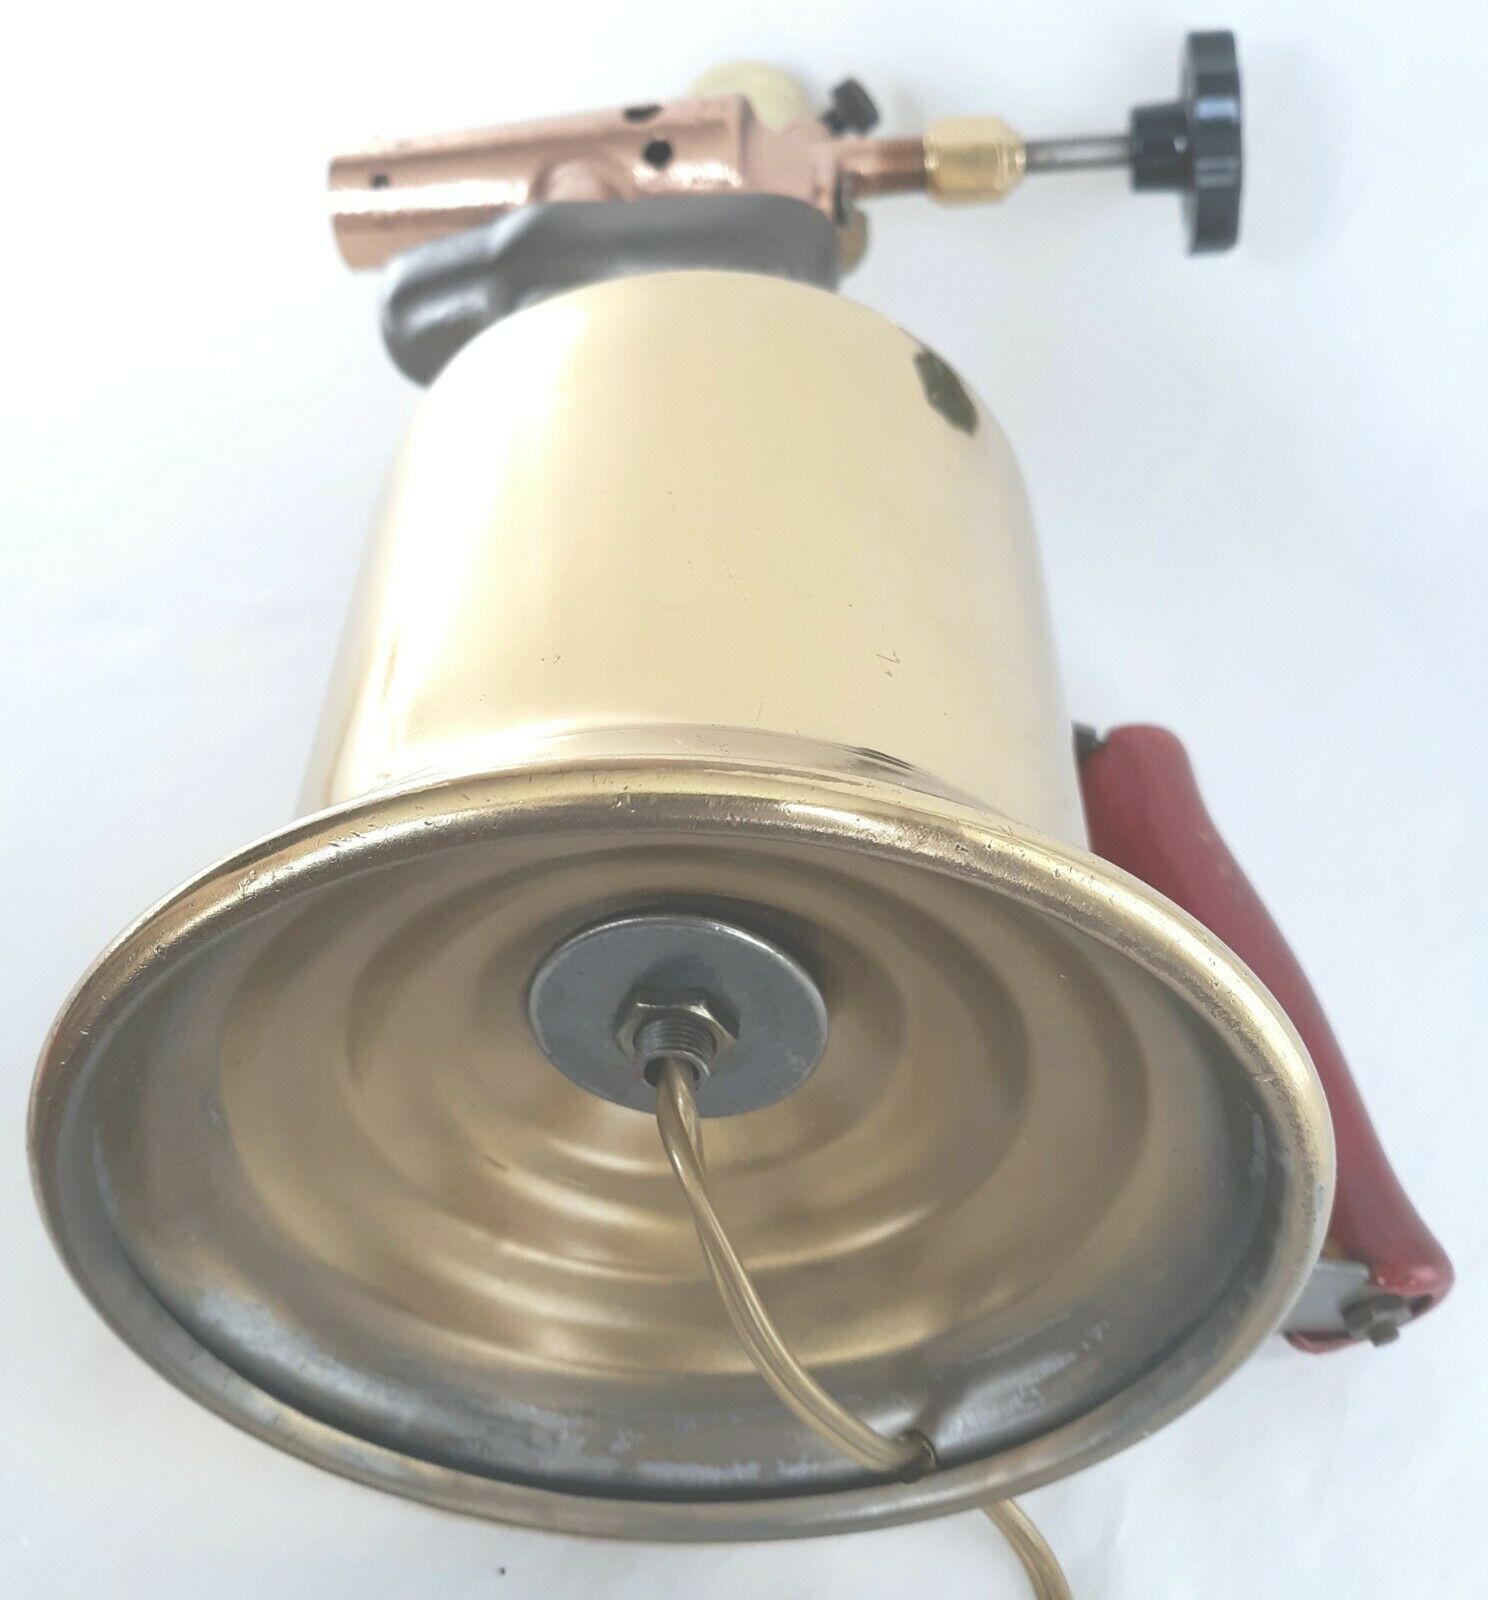 Vintage Blow Torch Lamp — Doghead Designs